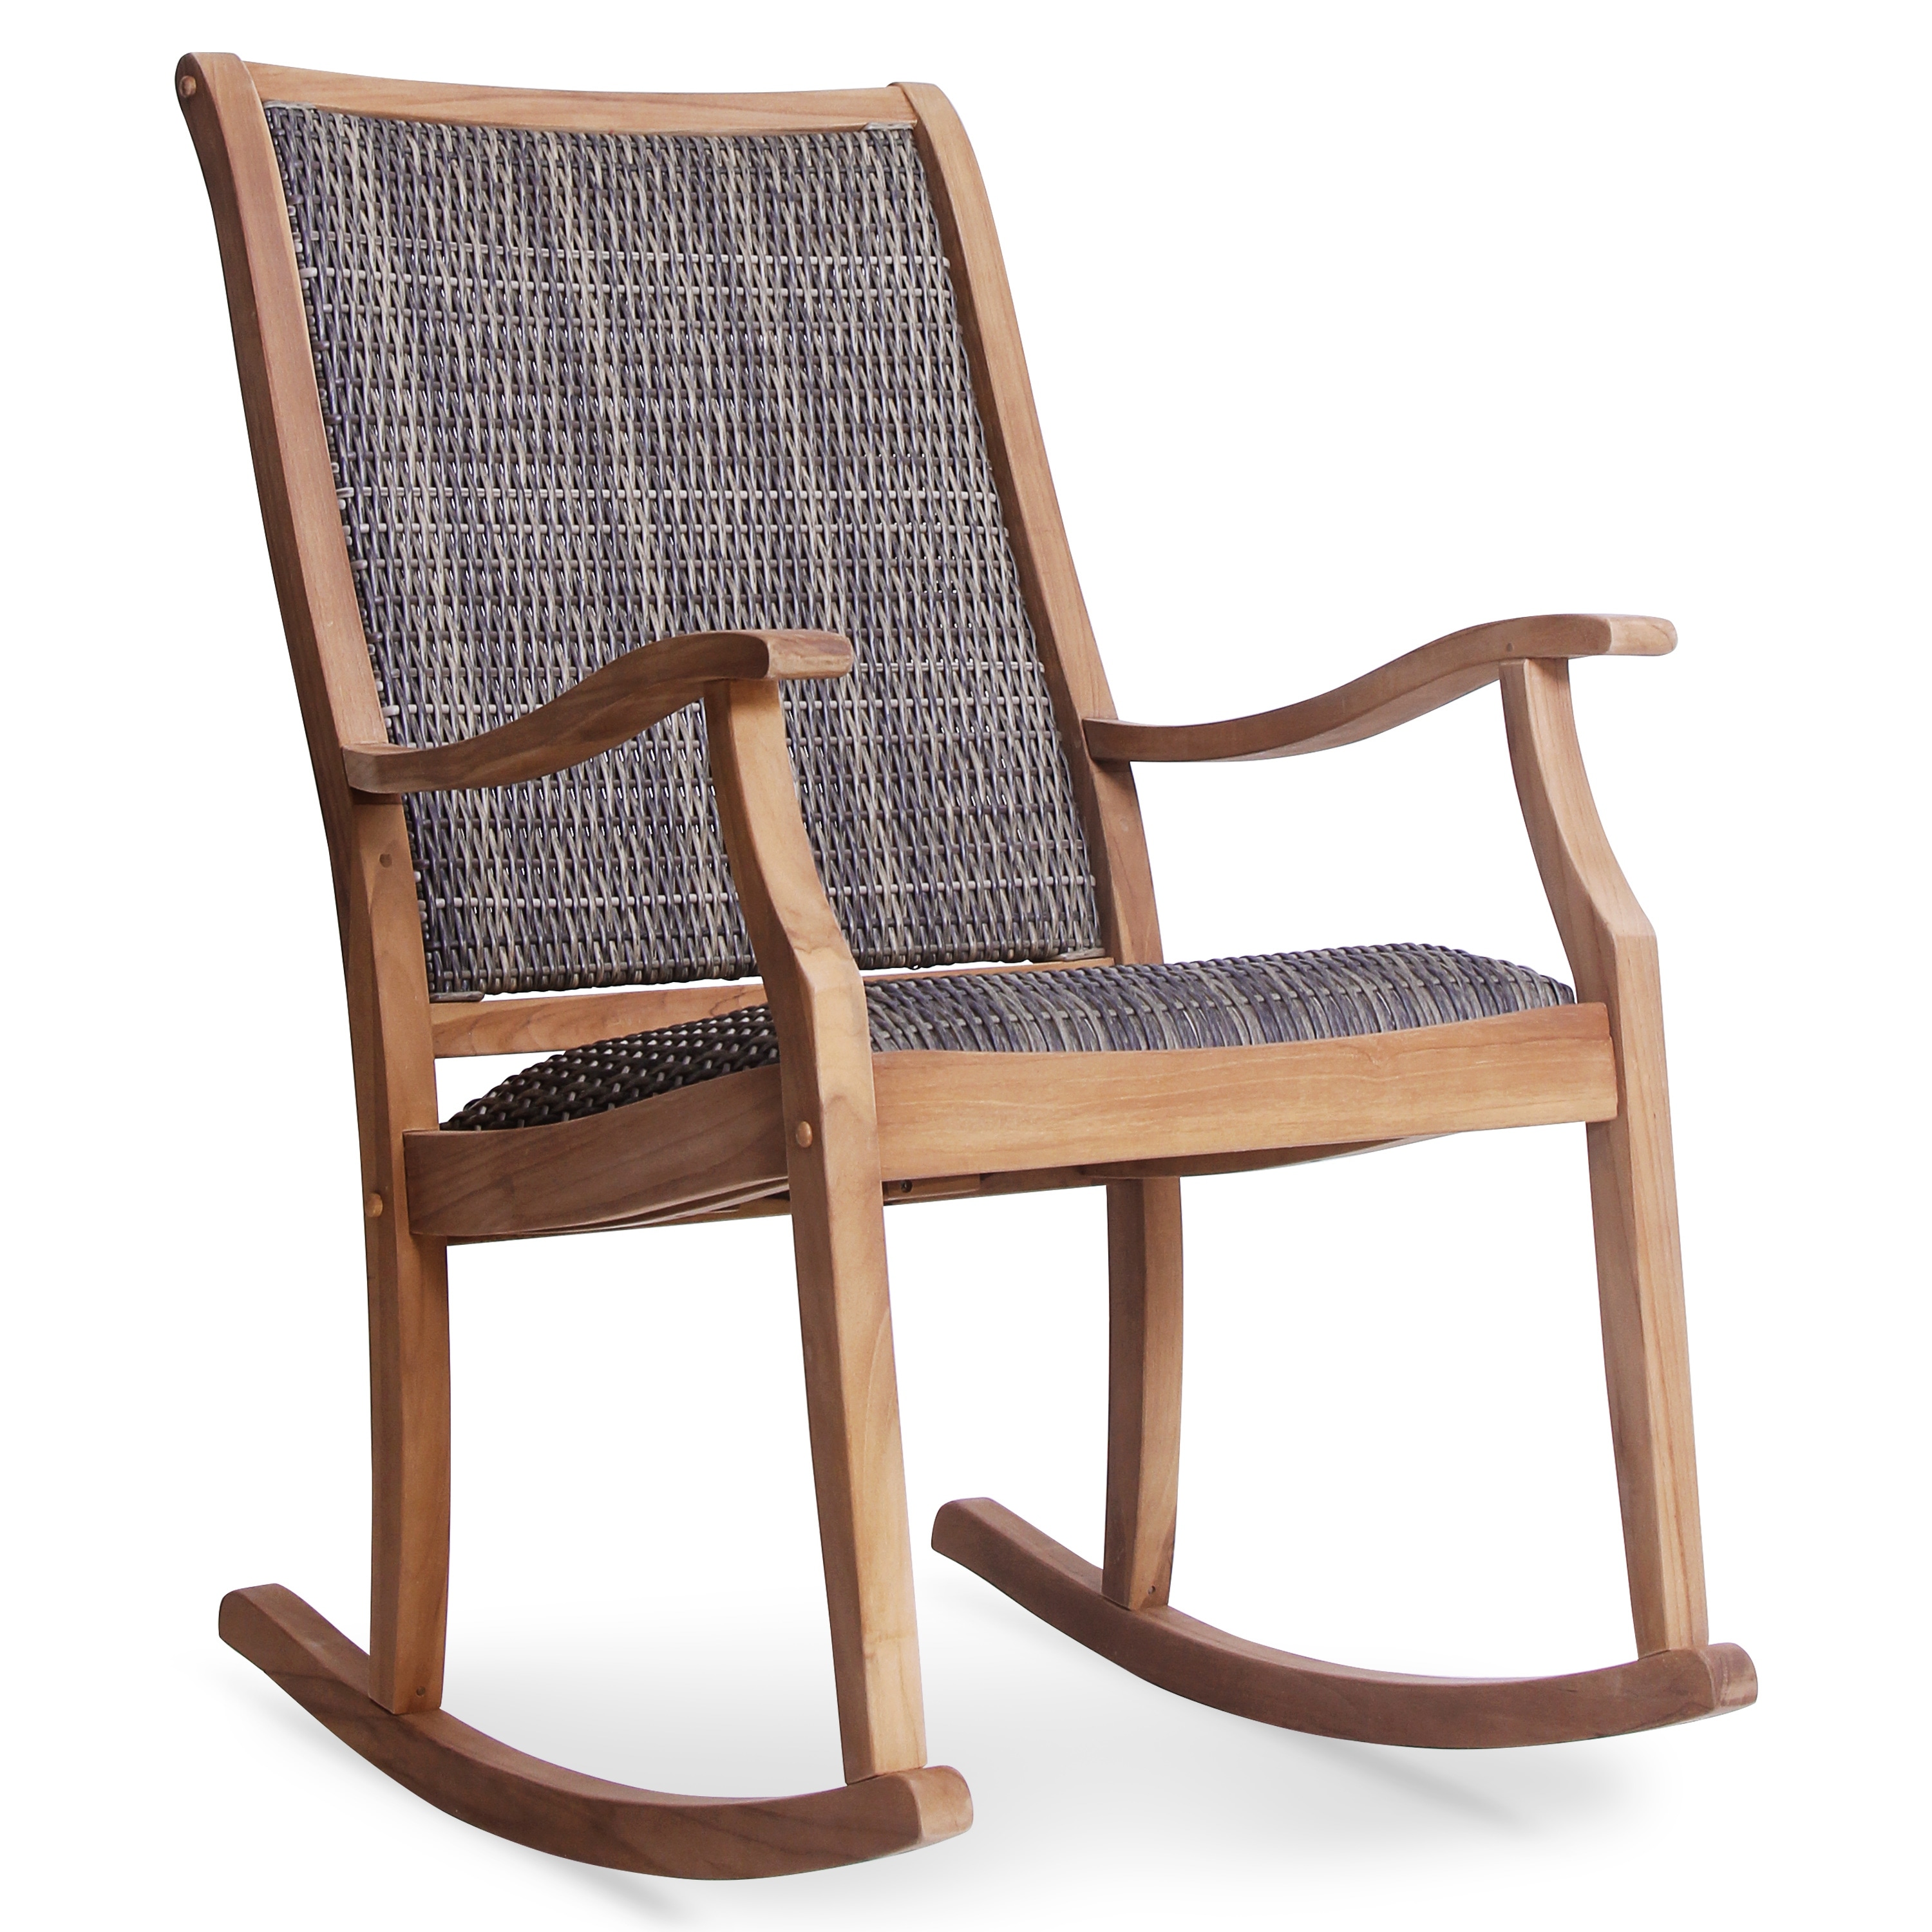 Cambridge Casual Dunham Solid Teak Wood Outdoor Wicker Rocking Chair